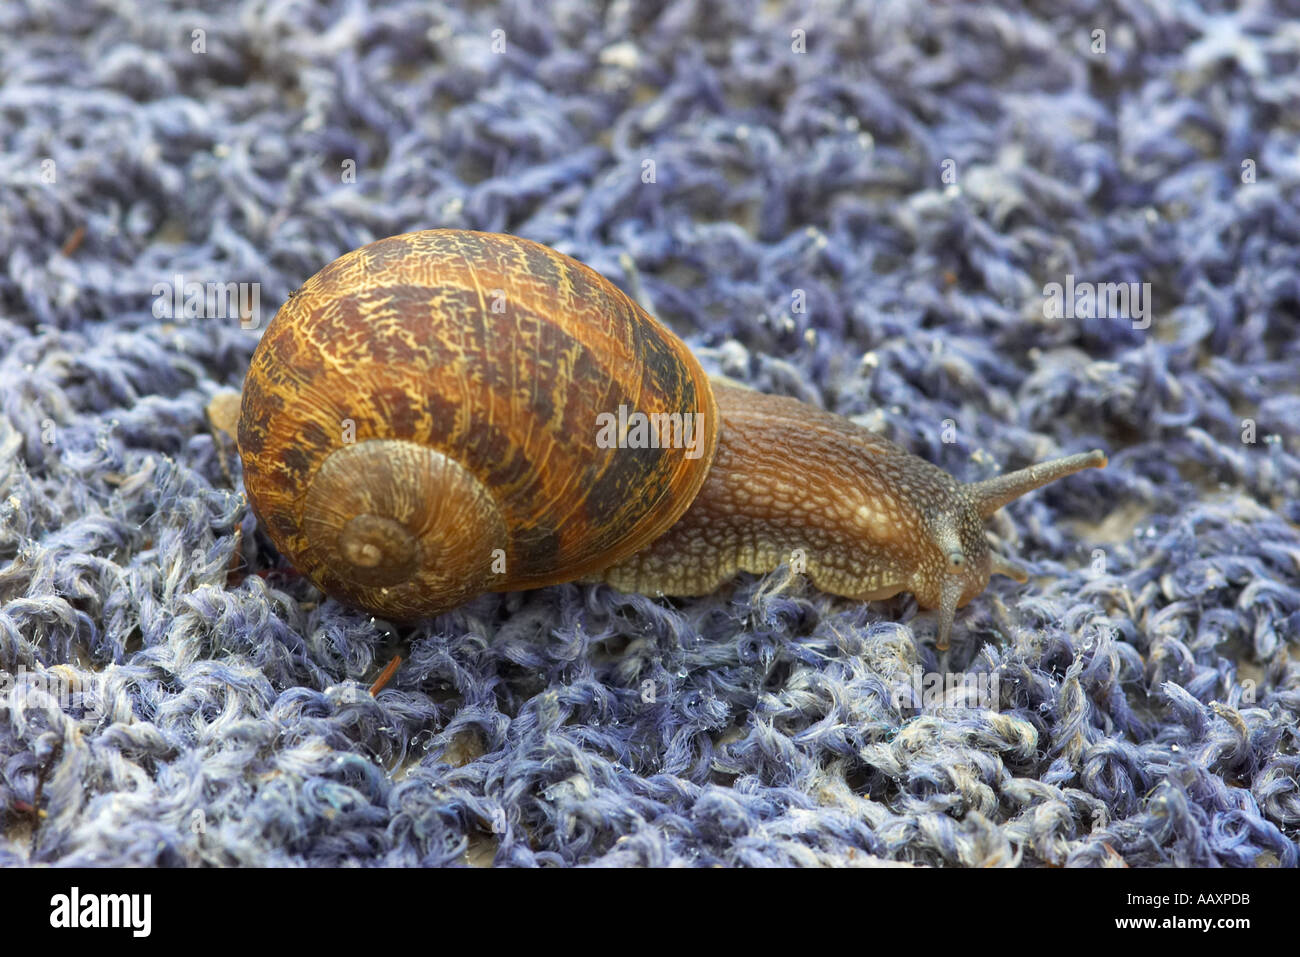 Common garden snail Helix aspersa traversing some old blue carpet Stock Photo